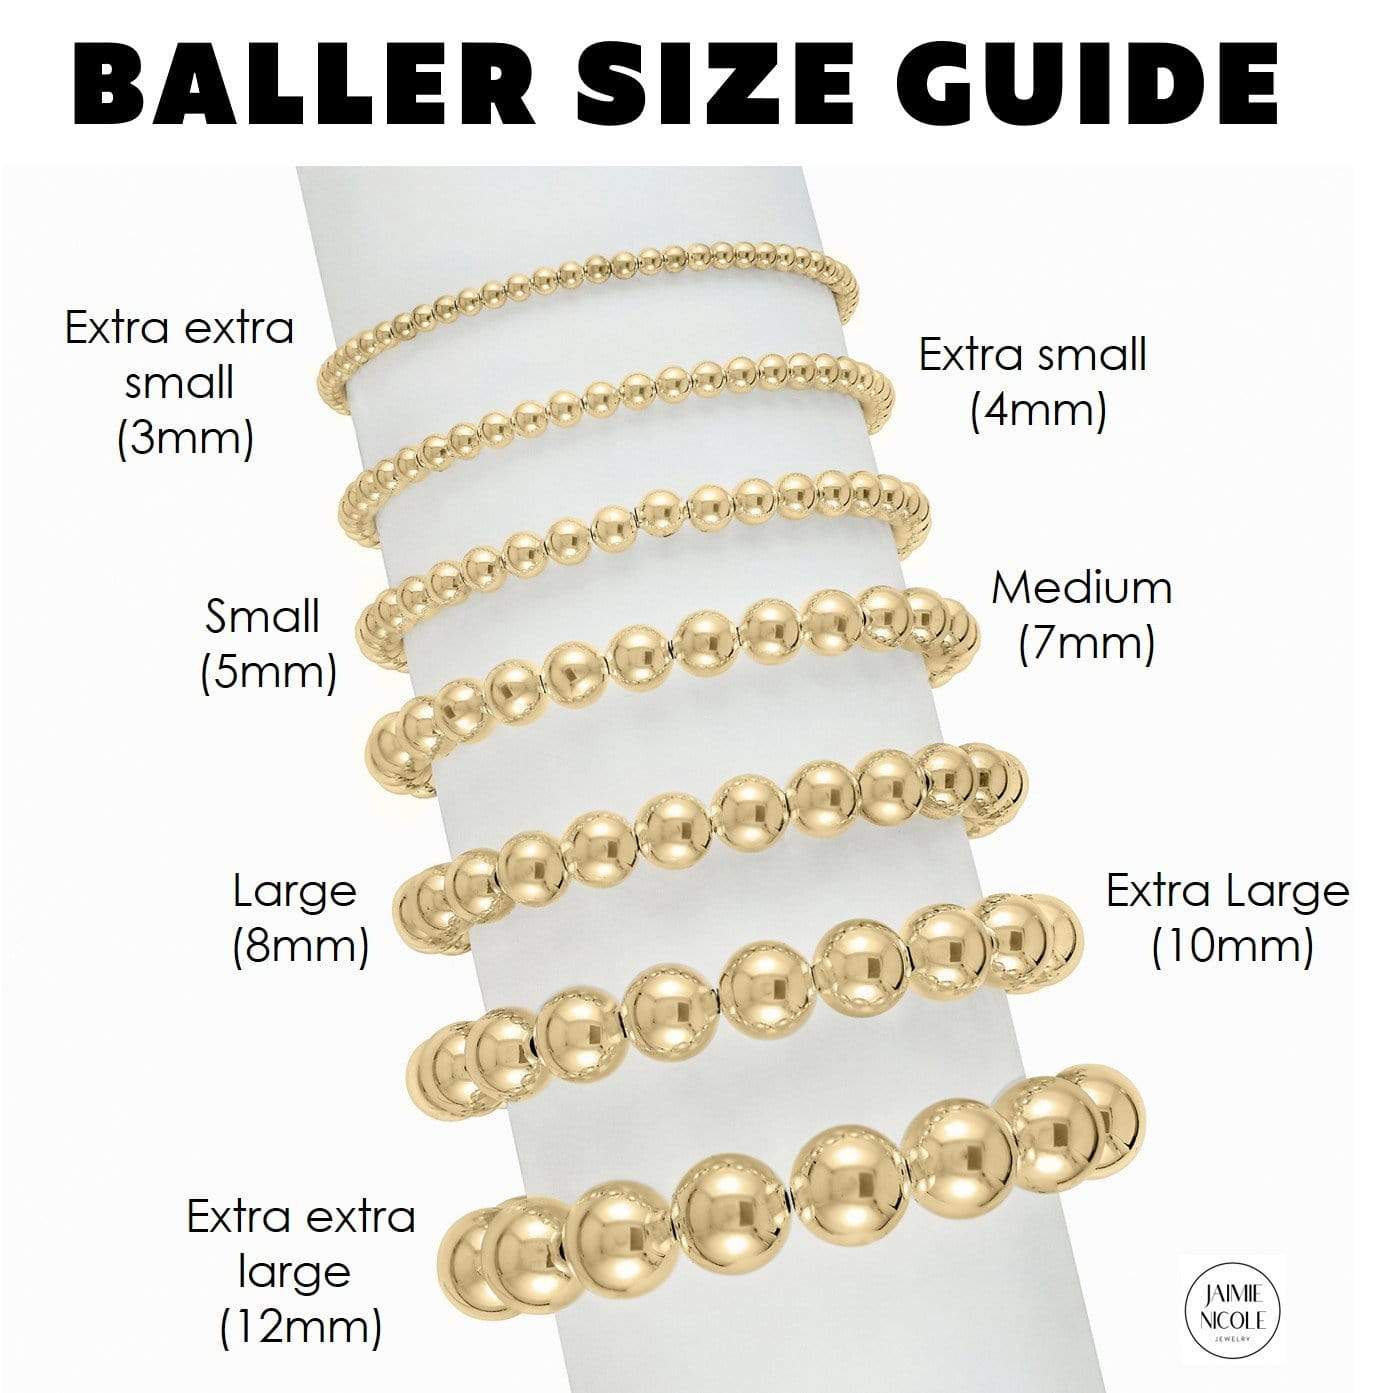 Cartier LOVE Bracelet Sizes: What Size Cartier Love Bracelet Should I Buy?  – Raymond Lee Jewelers